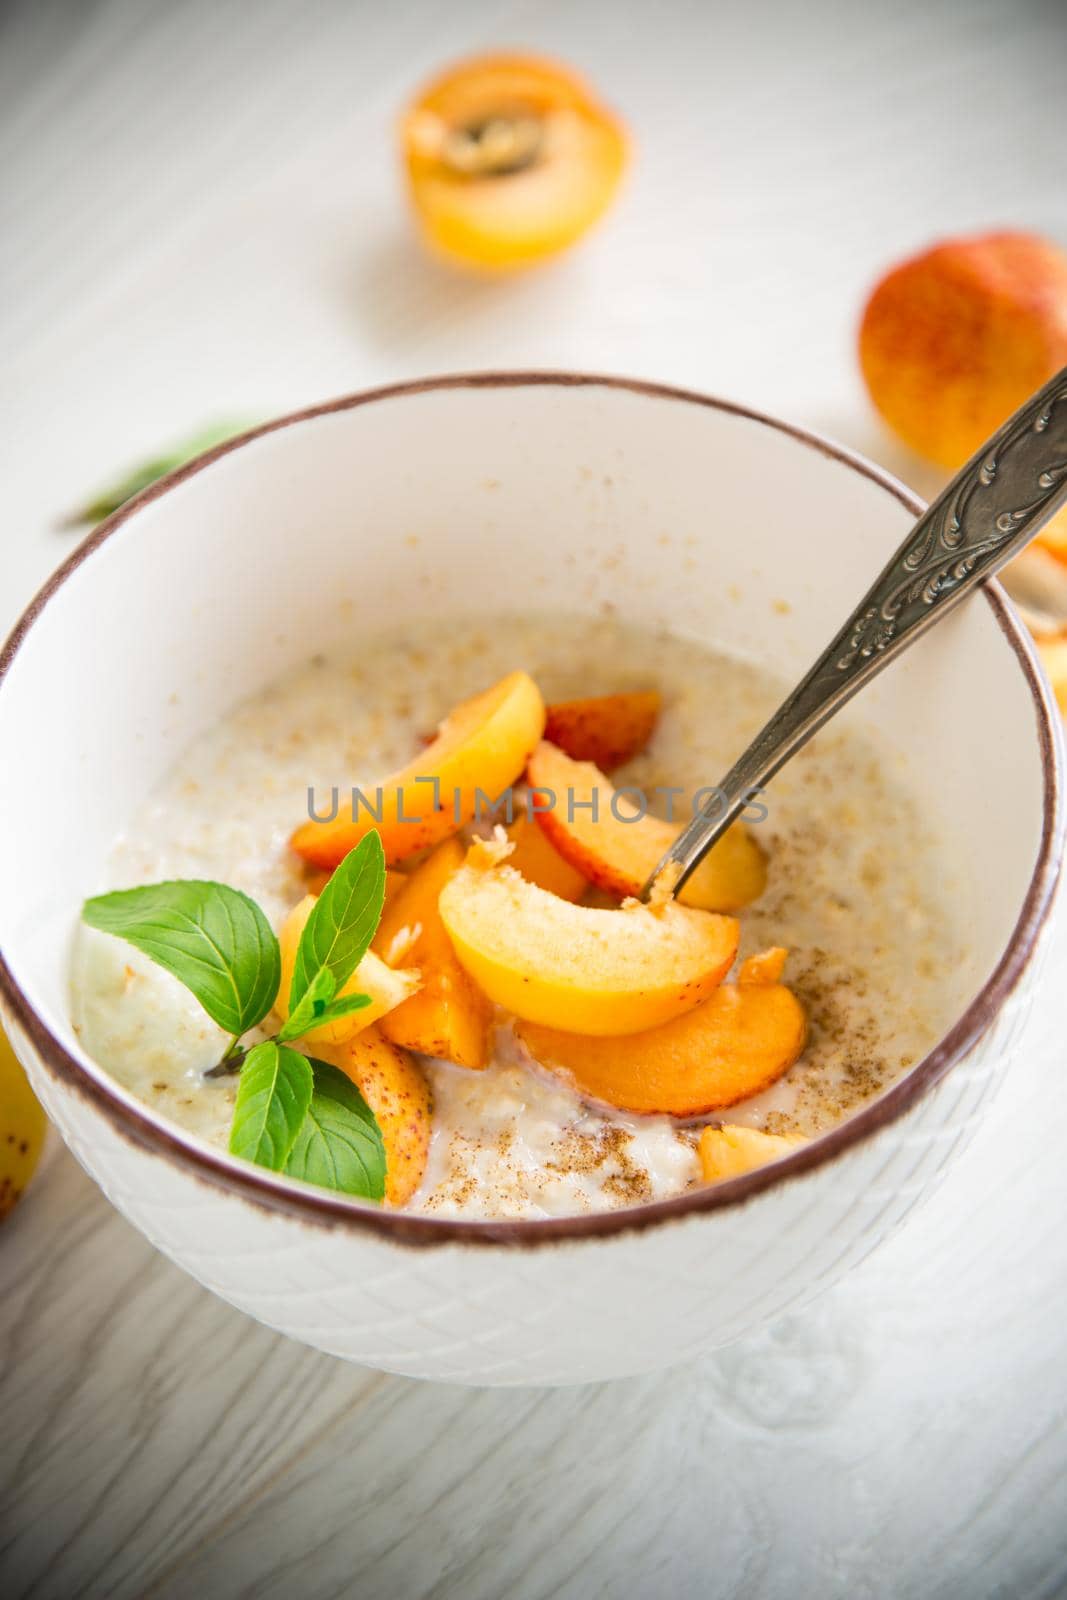 Healthy breakfast of apricot oatmeal with fresh fruit by Rawlik